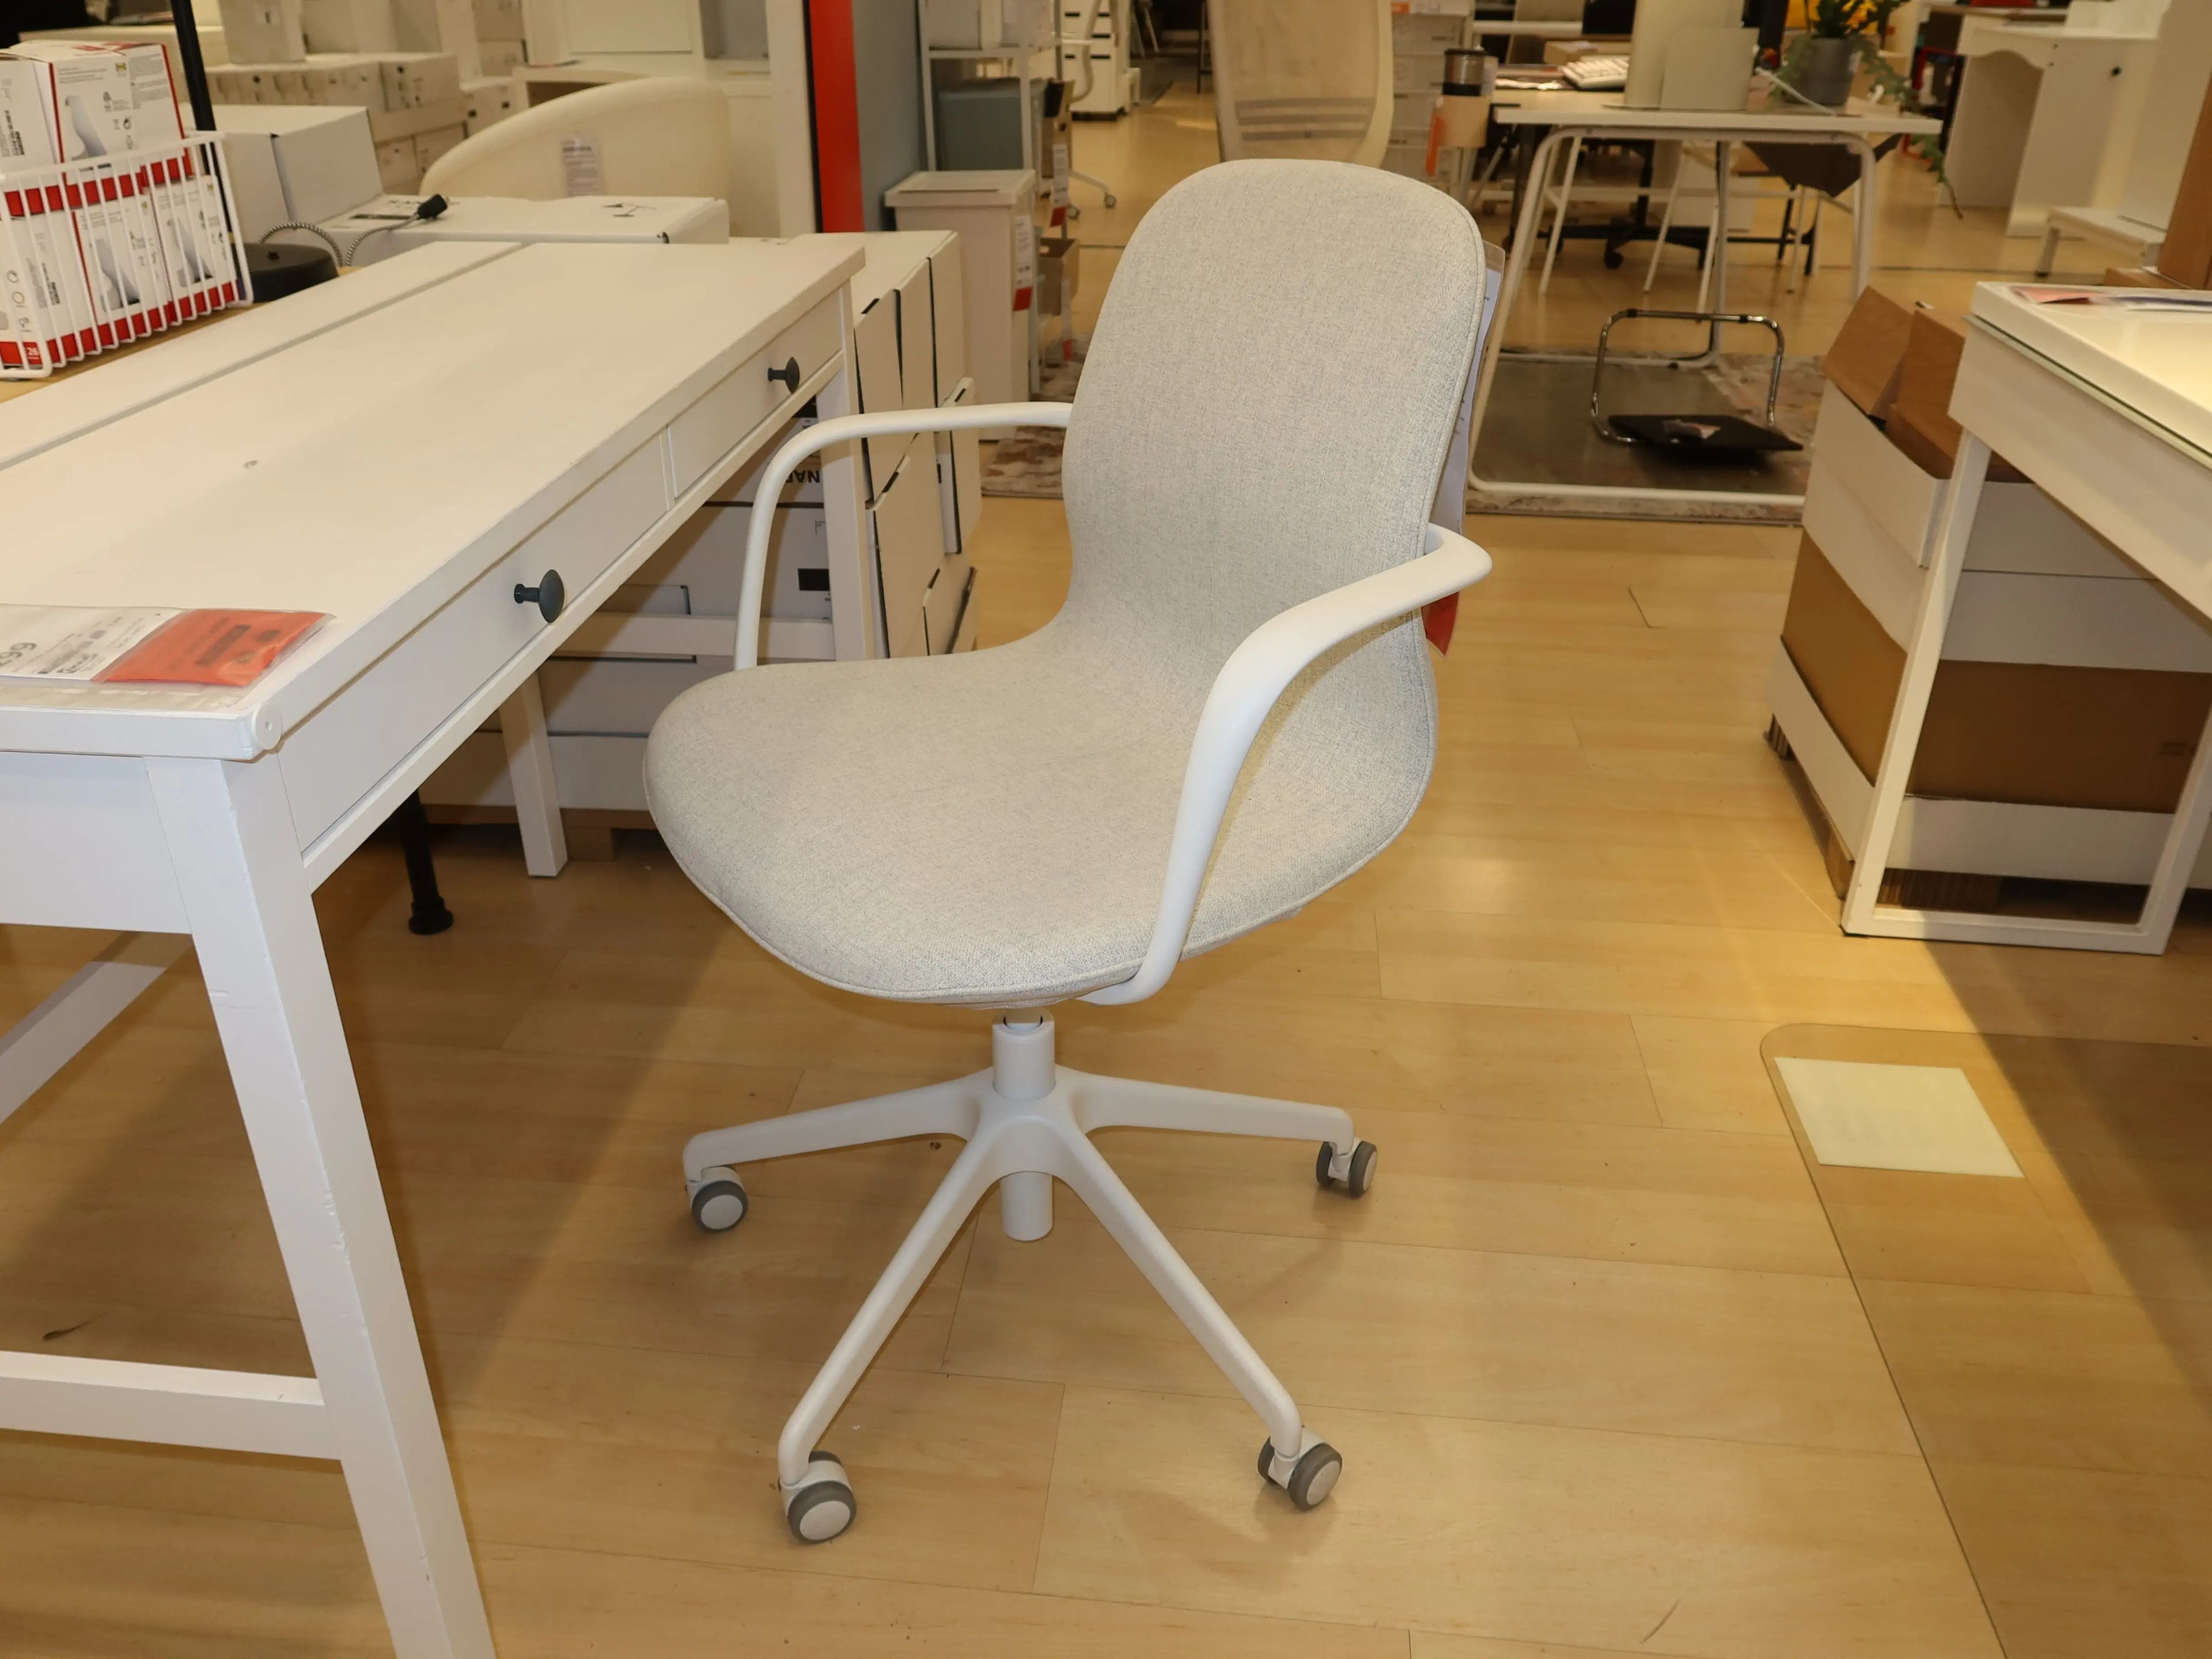 Las sillas de oficina de Ikea son agradables estéticamente